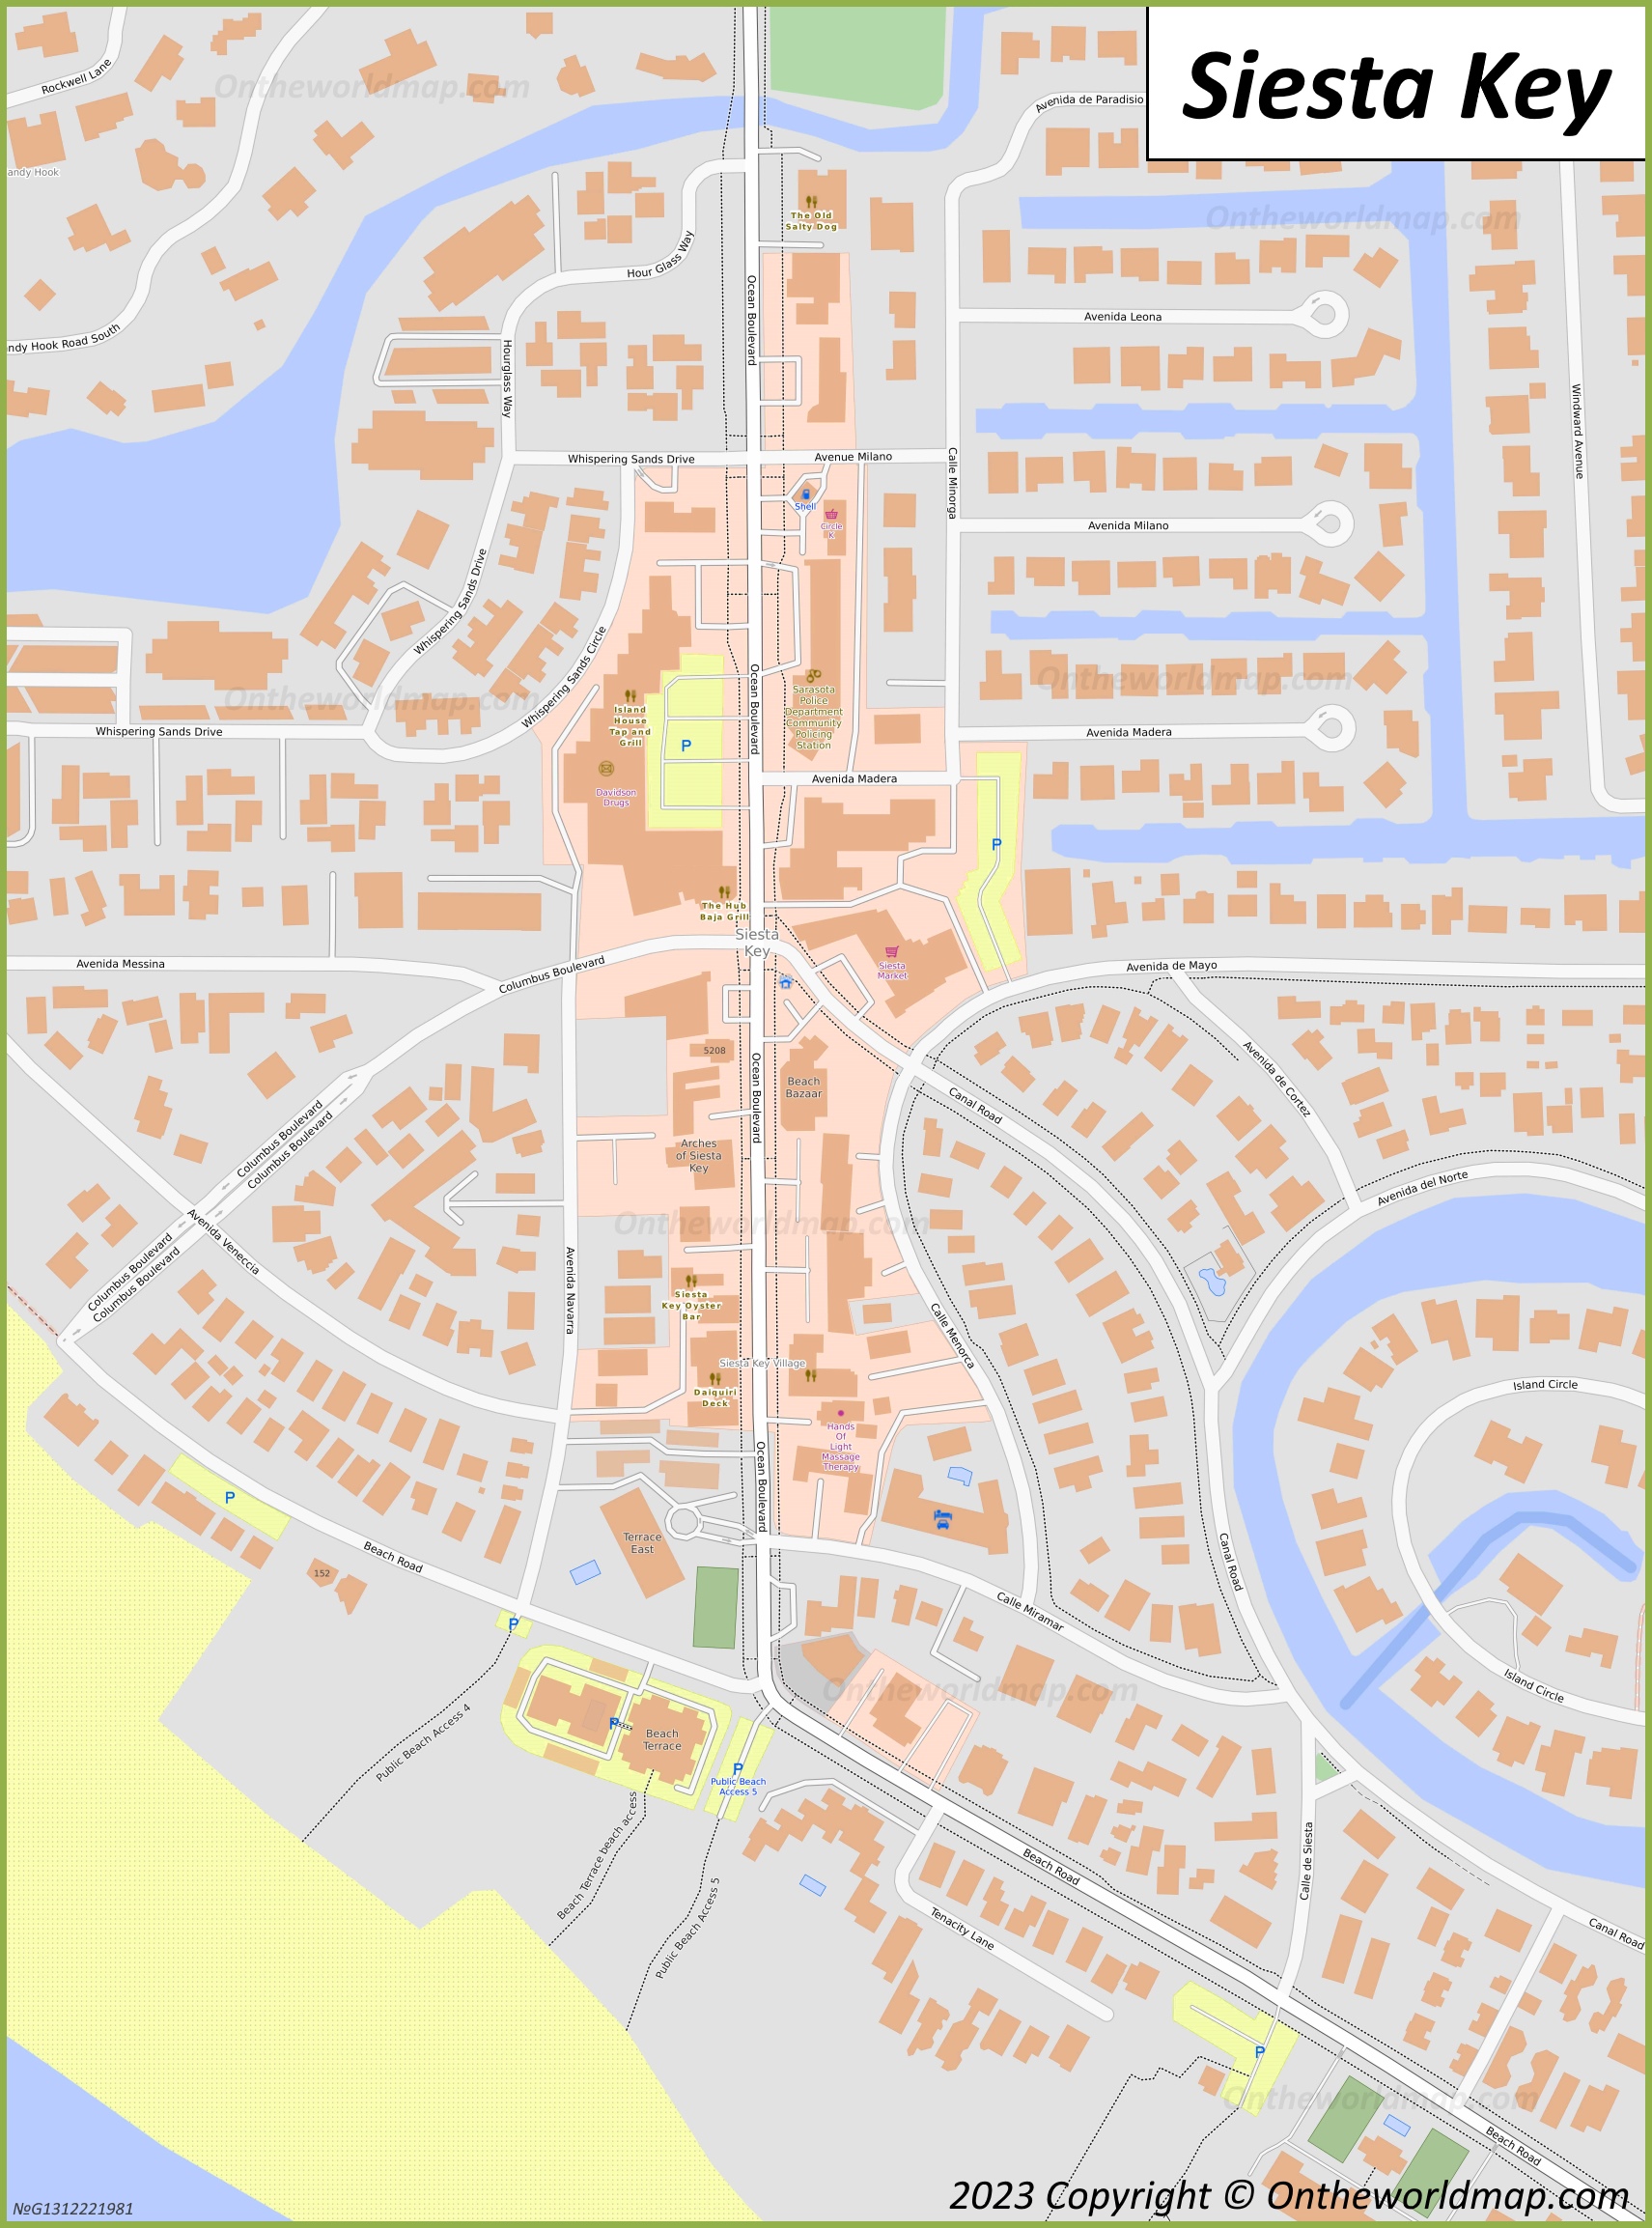 Siesta Key Village Map